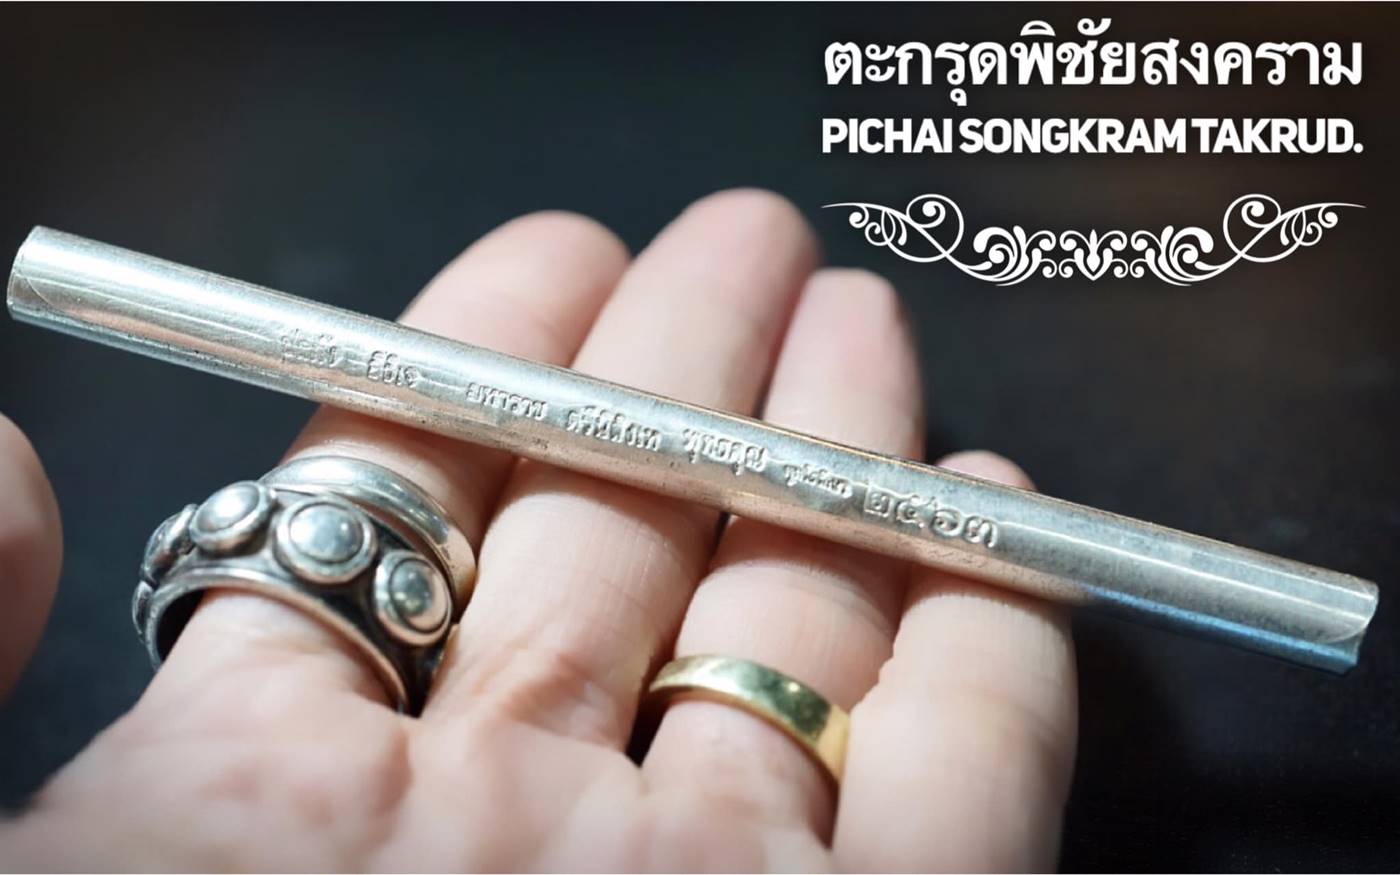 Pichai Songkram Takrud by Phra Arjarn O, Phetchabun. - คลิกที่นี่เพื่อดูรูปภาพใหญ่